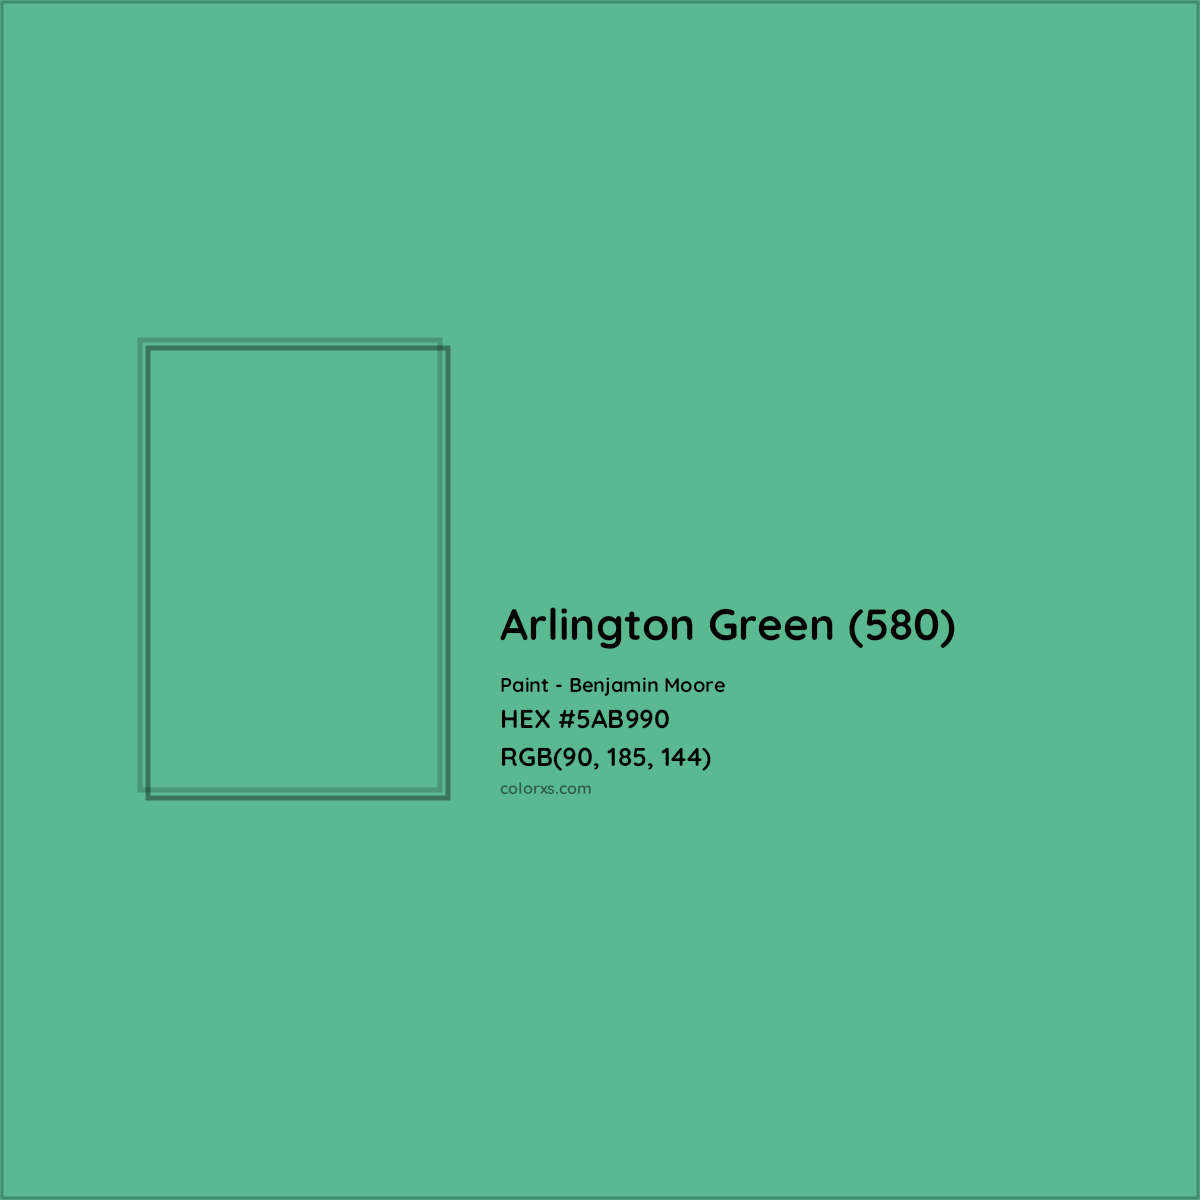 HEX #5AB990 Arlington Green (580) Paint Benjamin Moore - Color Code